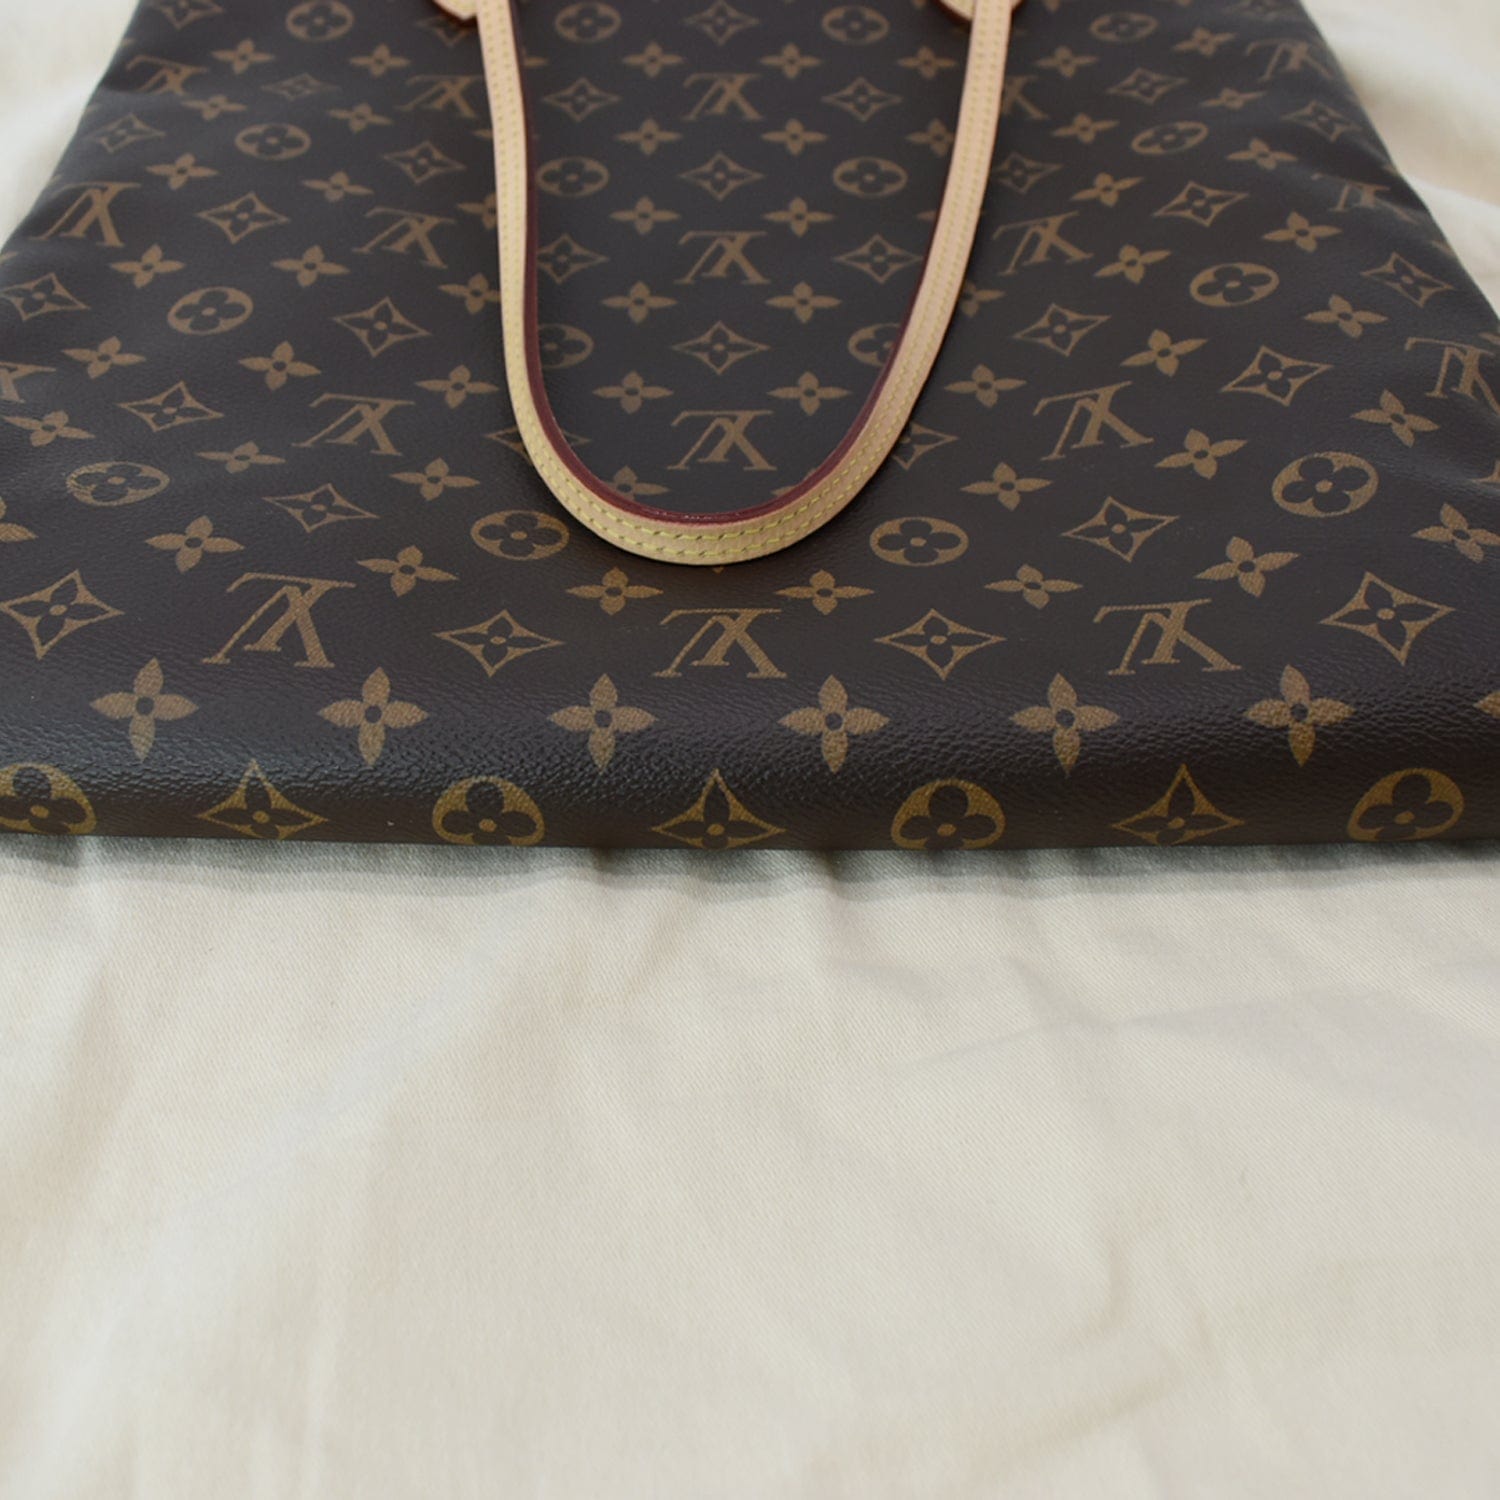 Louis Vuitton Carry It - ShopStyle Tote Bags